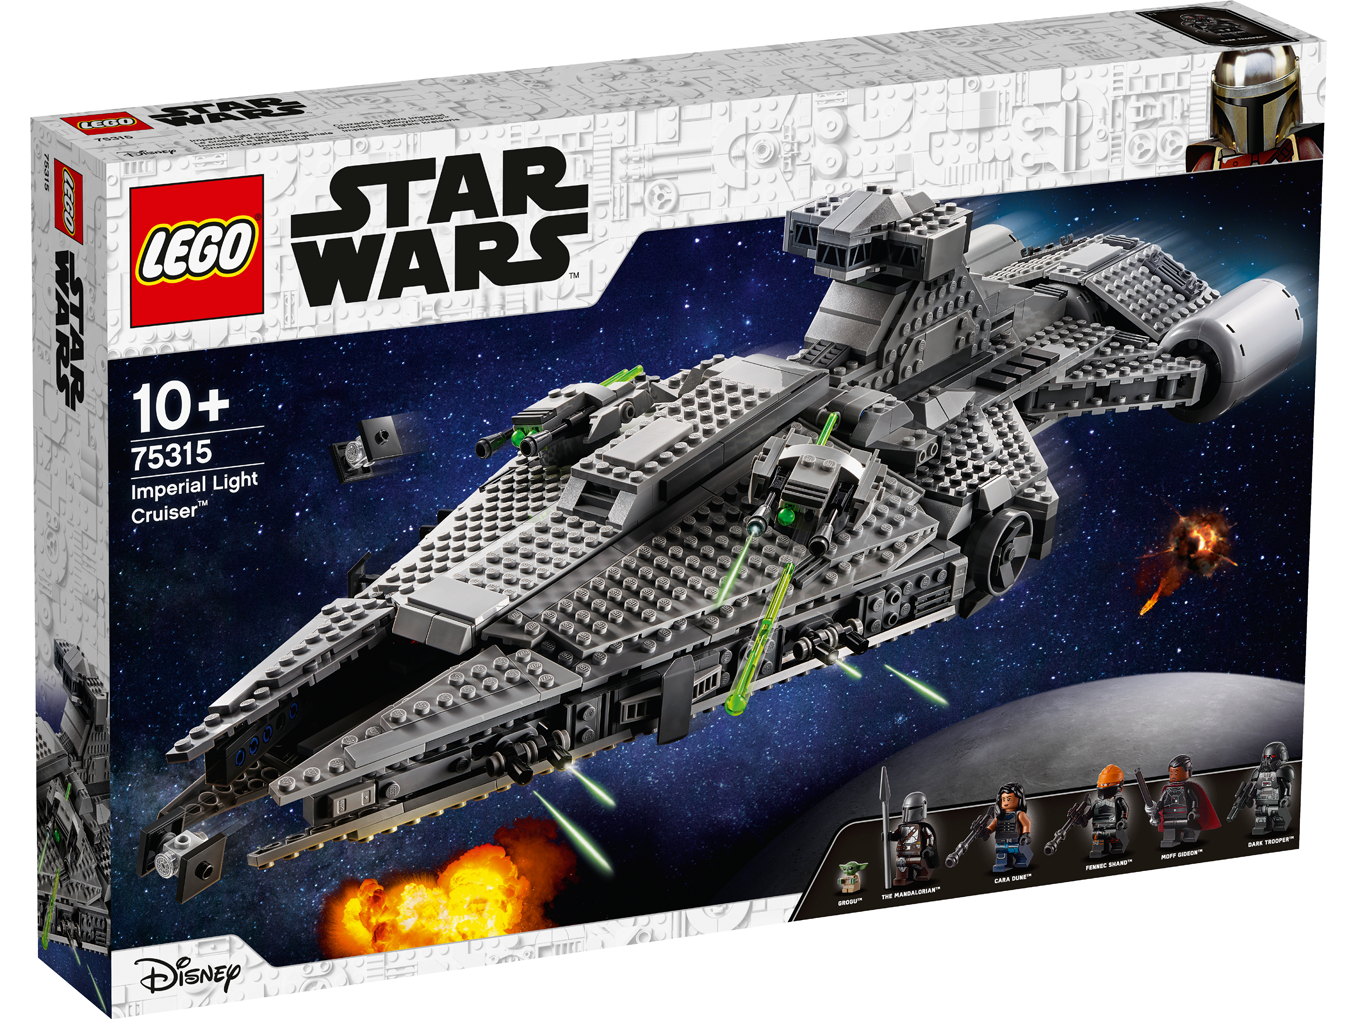 Bezighouden Winkelier schieten LEGO Star Wars 75315 Imperial Light Cruiser - Jan's Steen